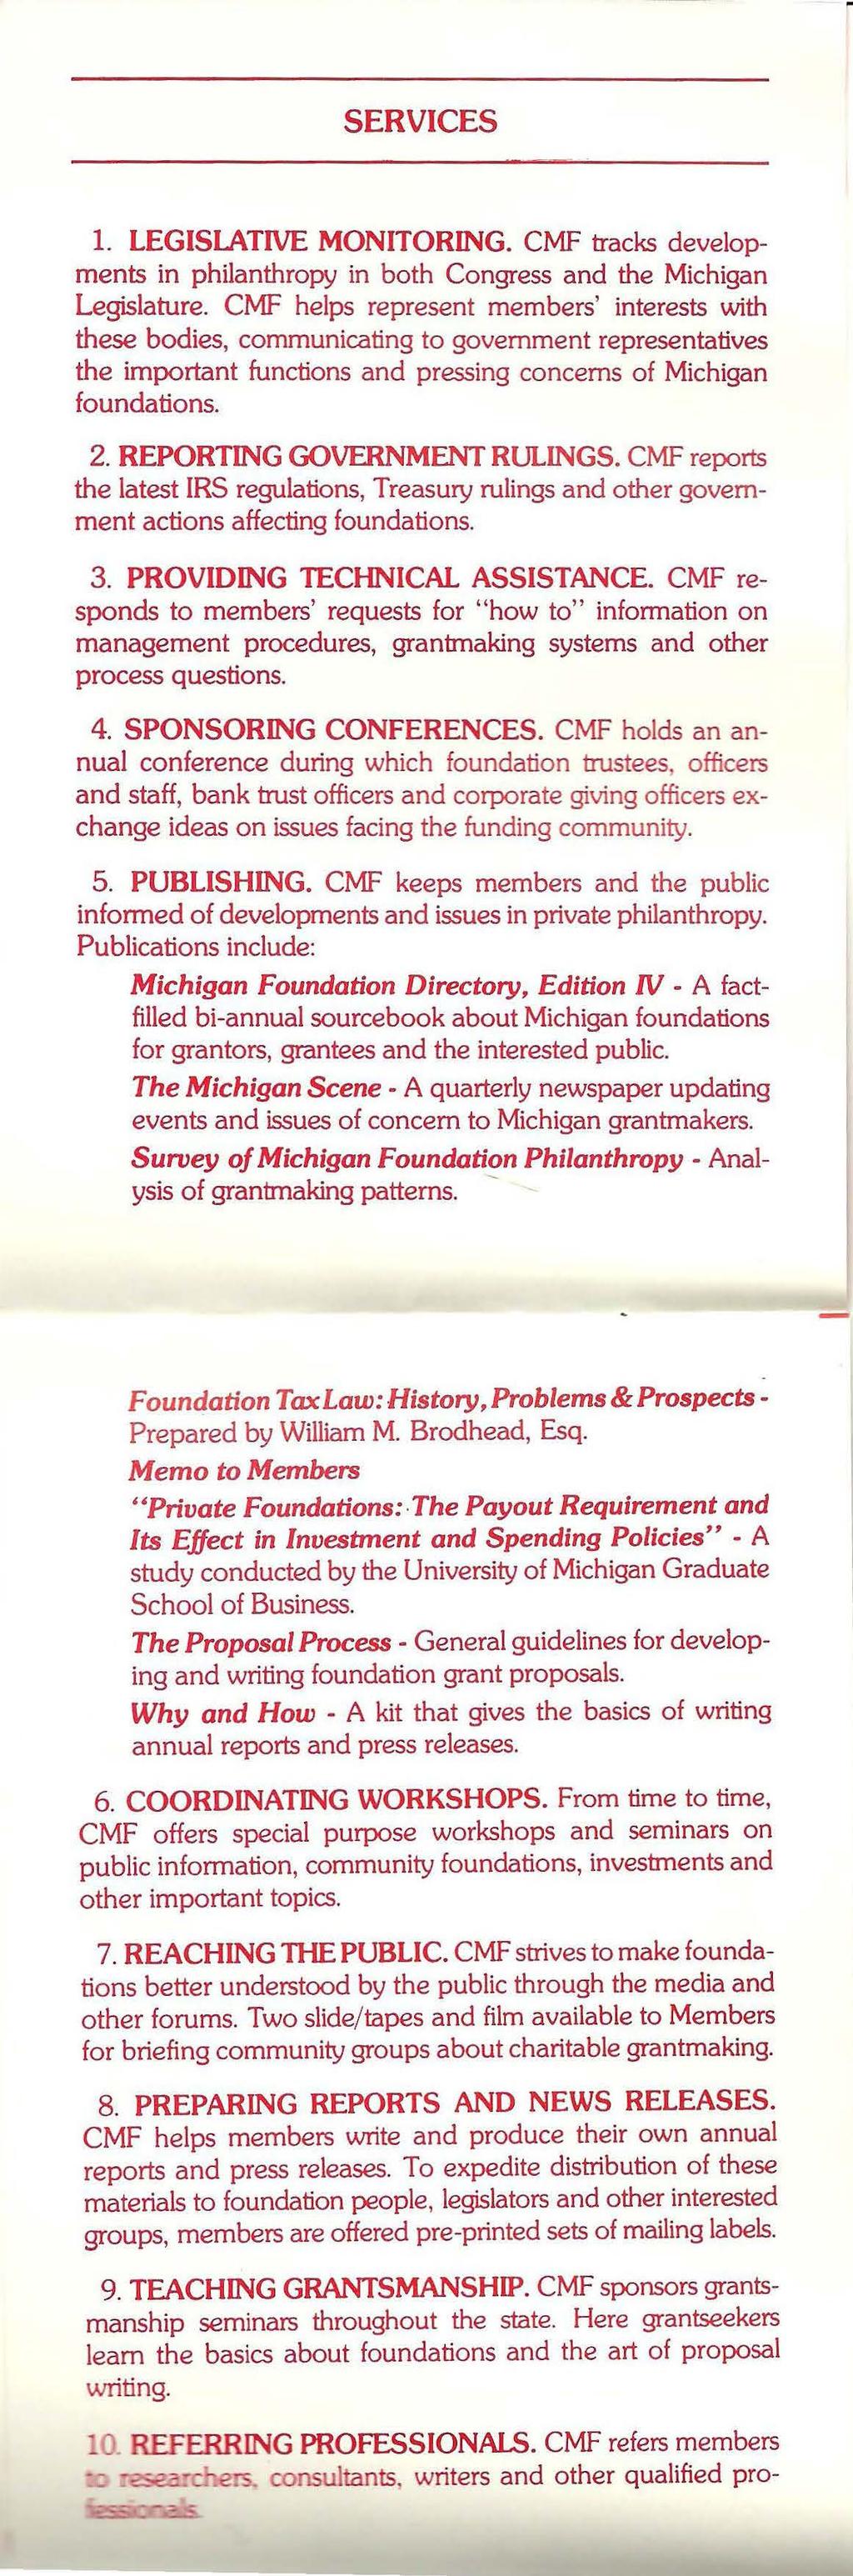 SERVICES 1. LEGISlATIVE MONITORING. CMF tracks developments in philanthropy in both Congress and the Michigan Legislature.